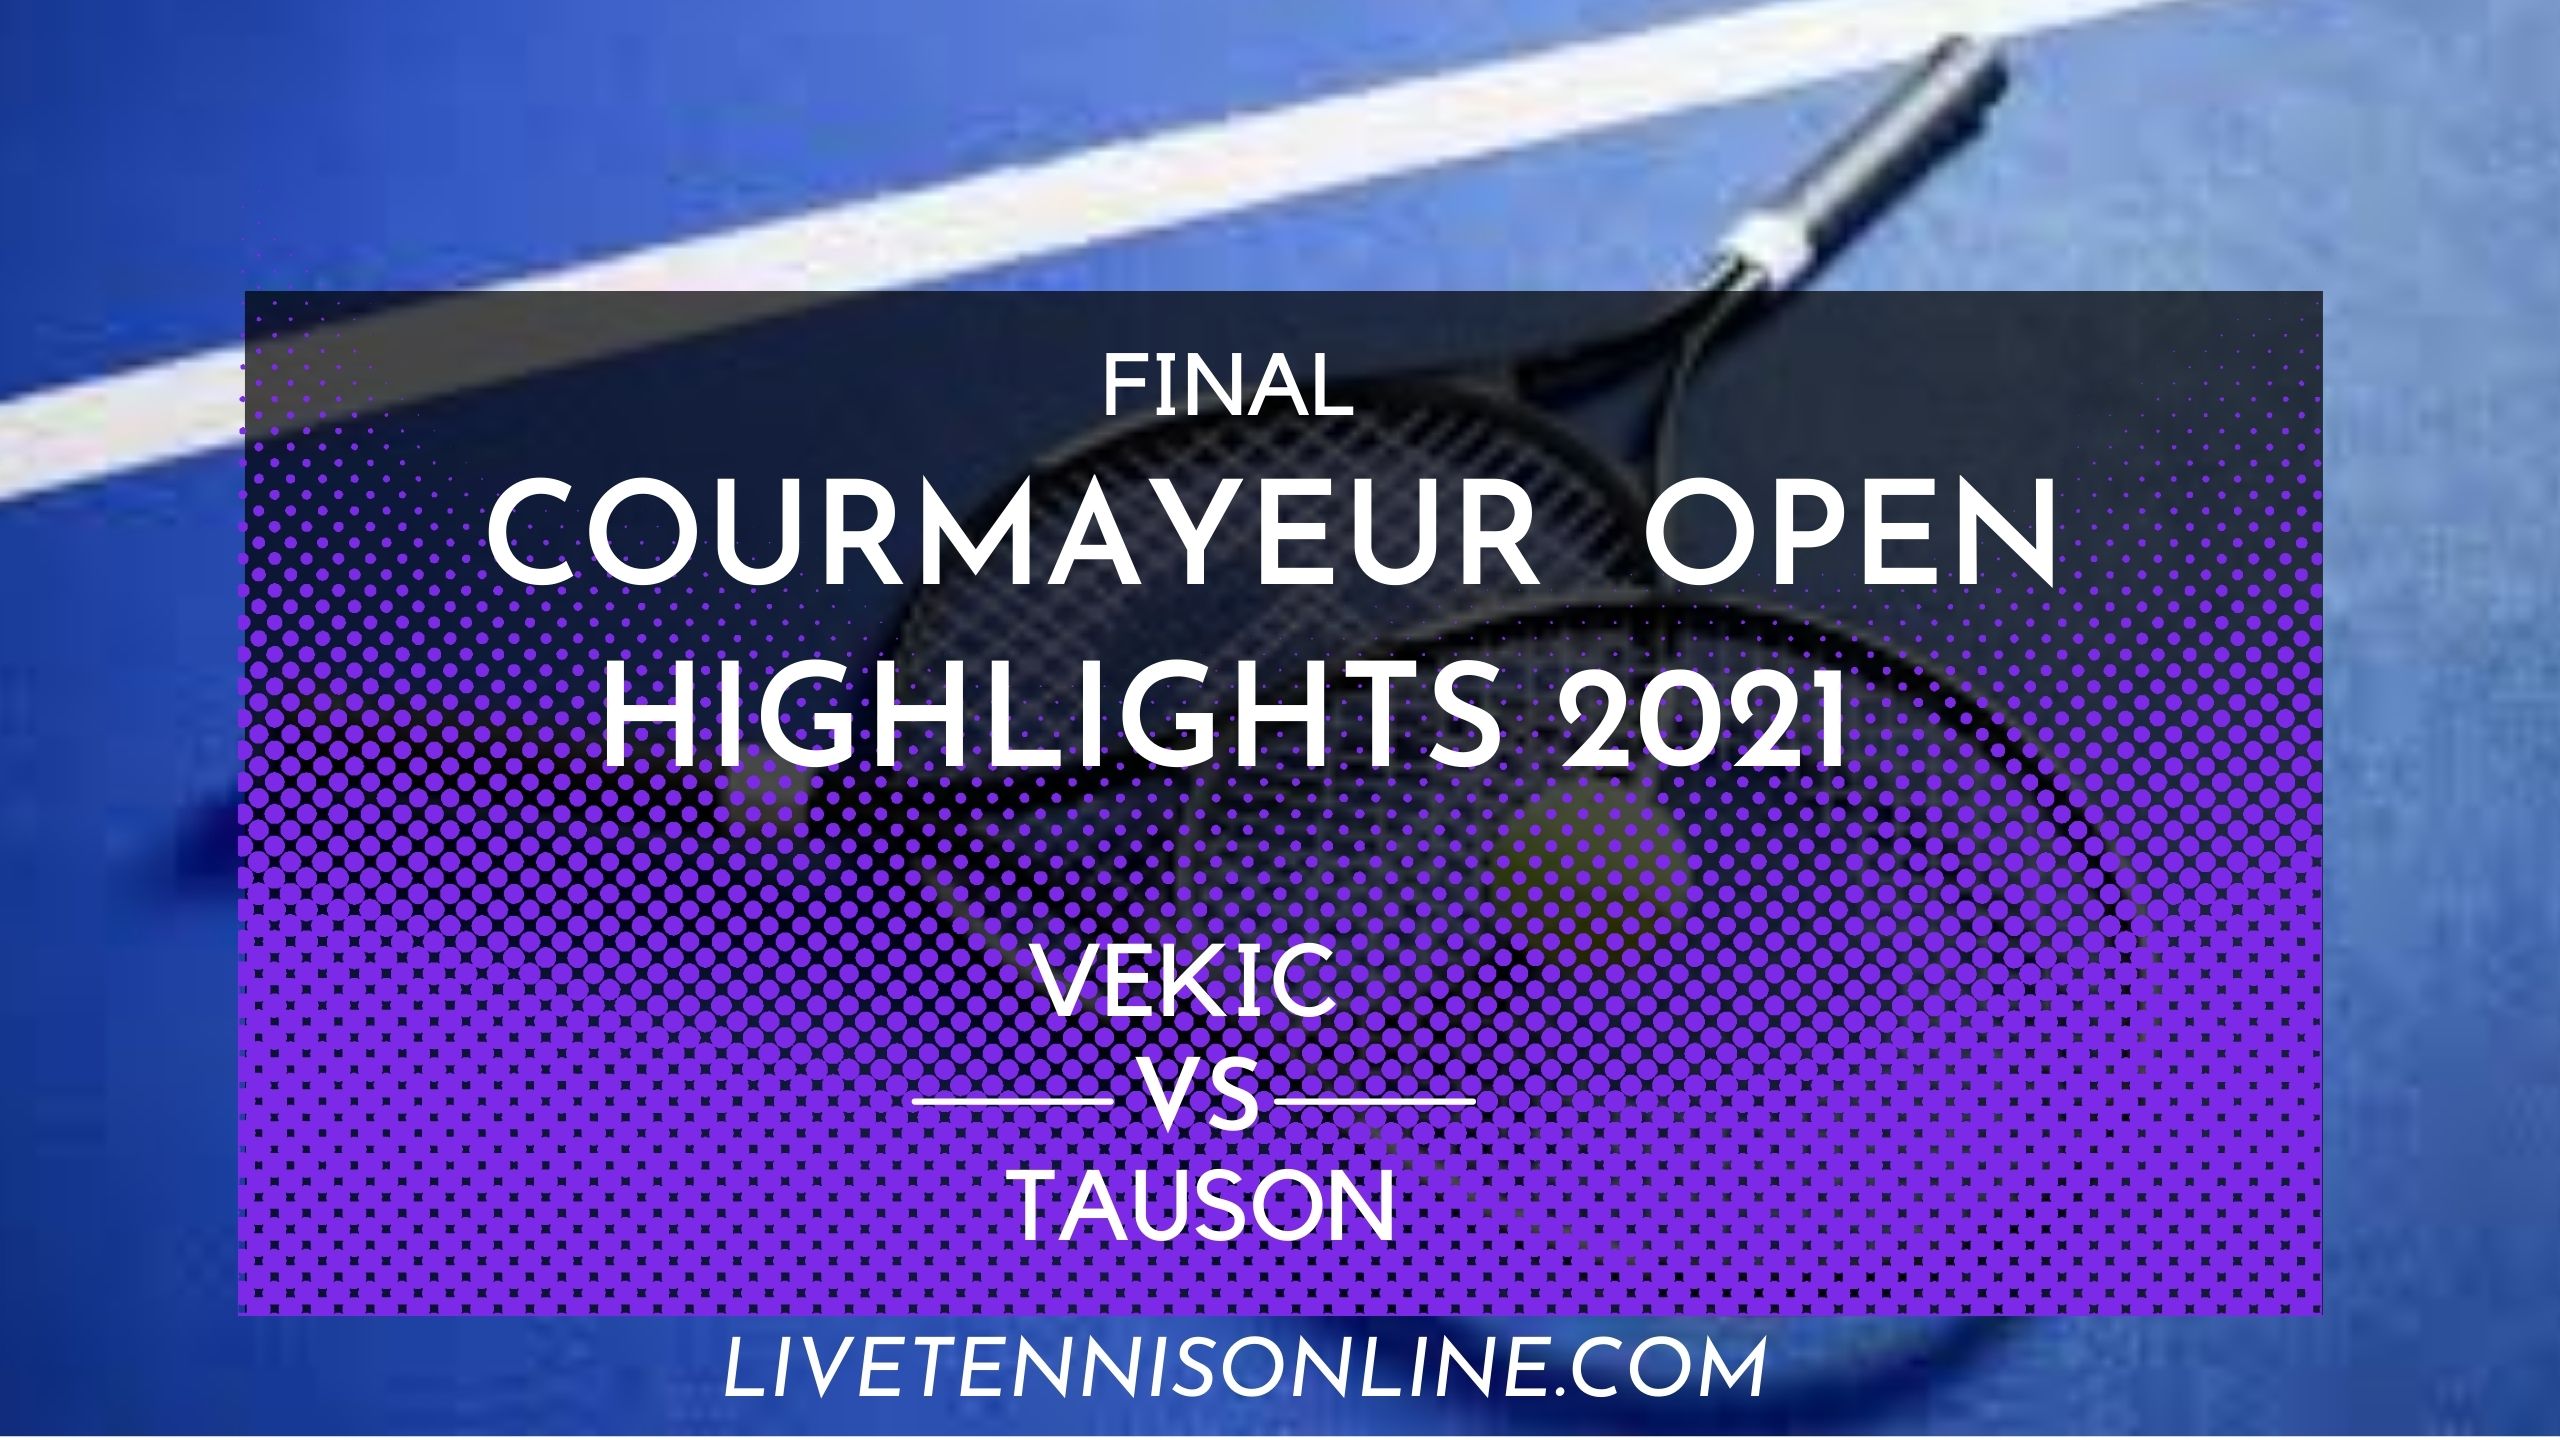 Vekic Vs Tauson Final Highlights 2021 | Courmayeur Open